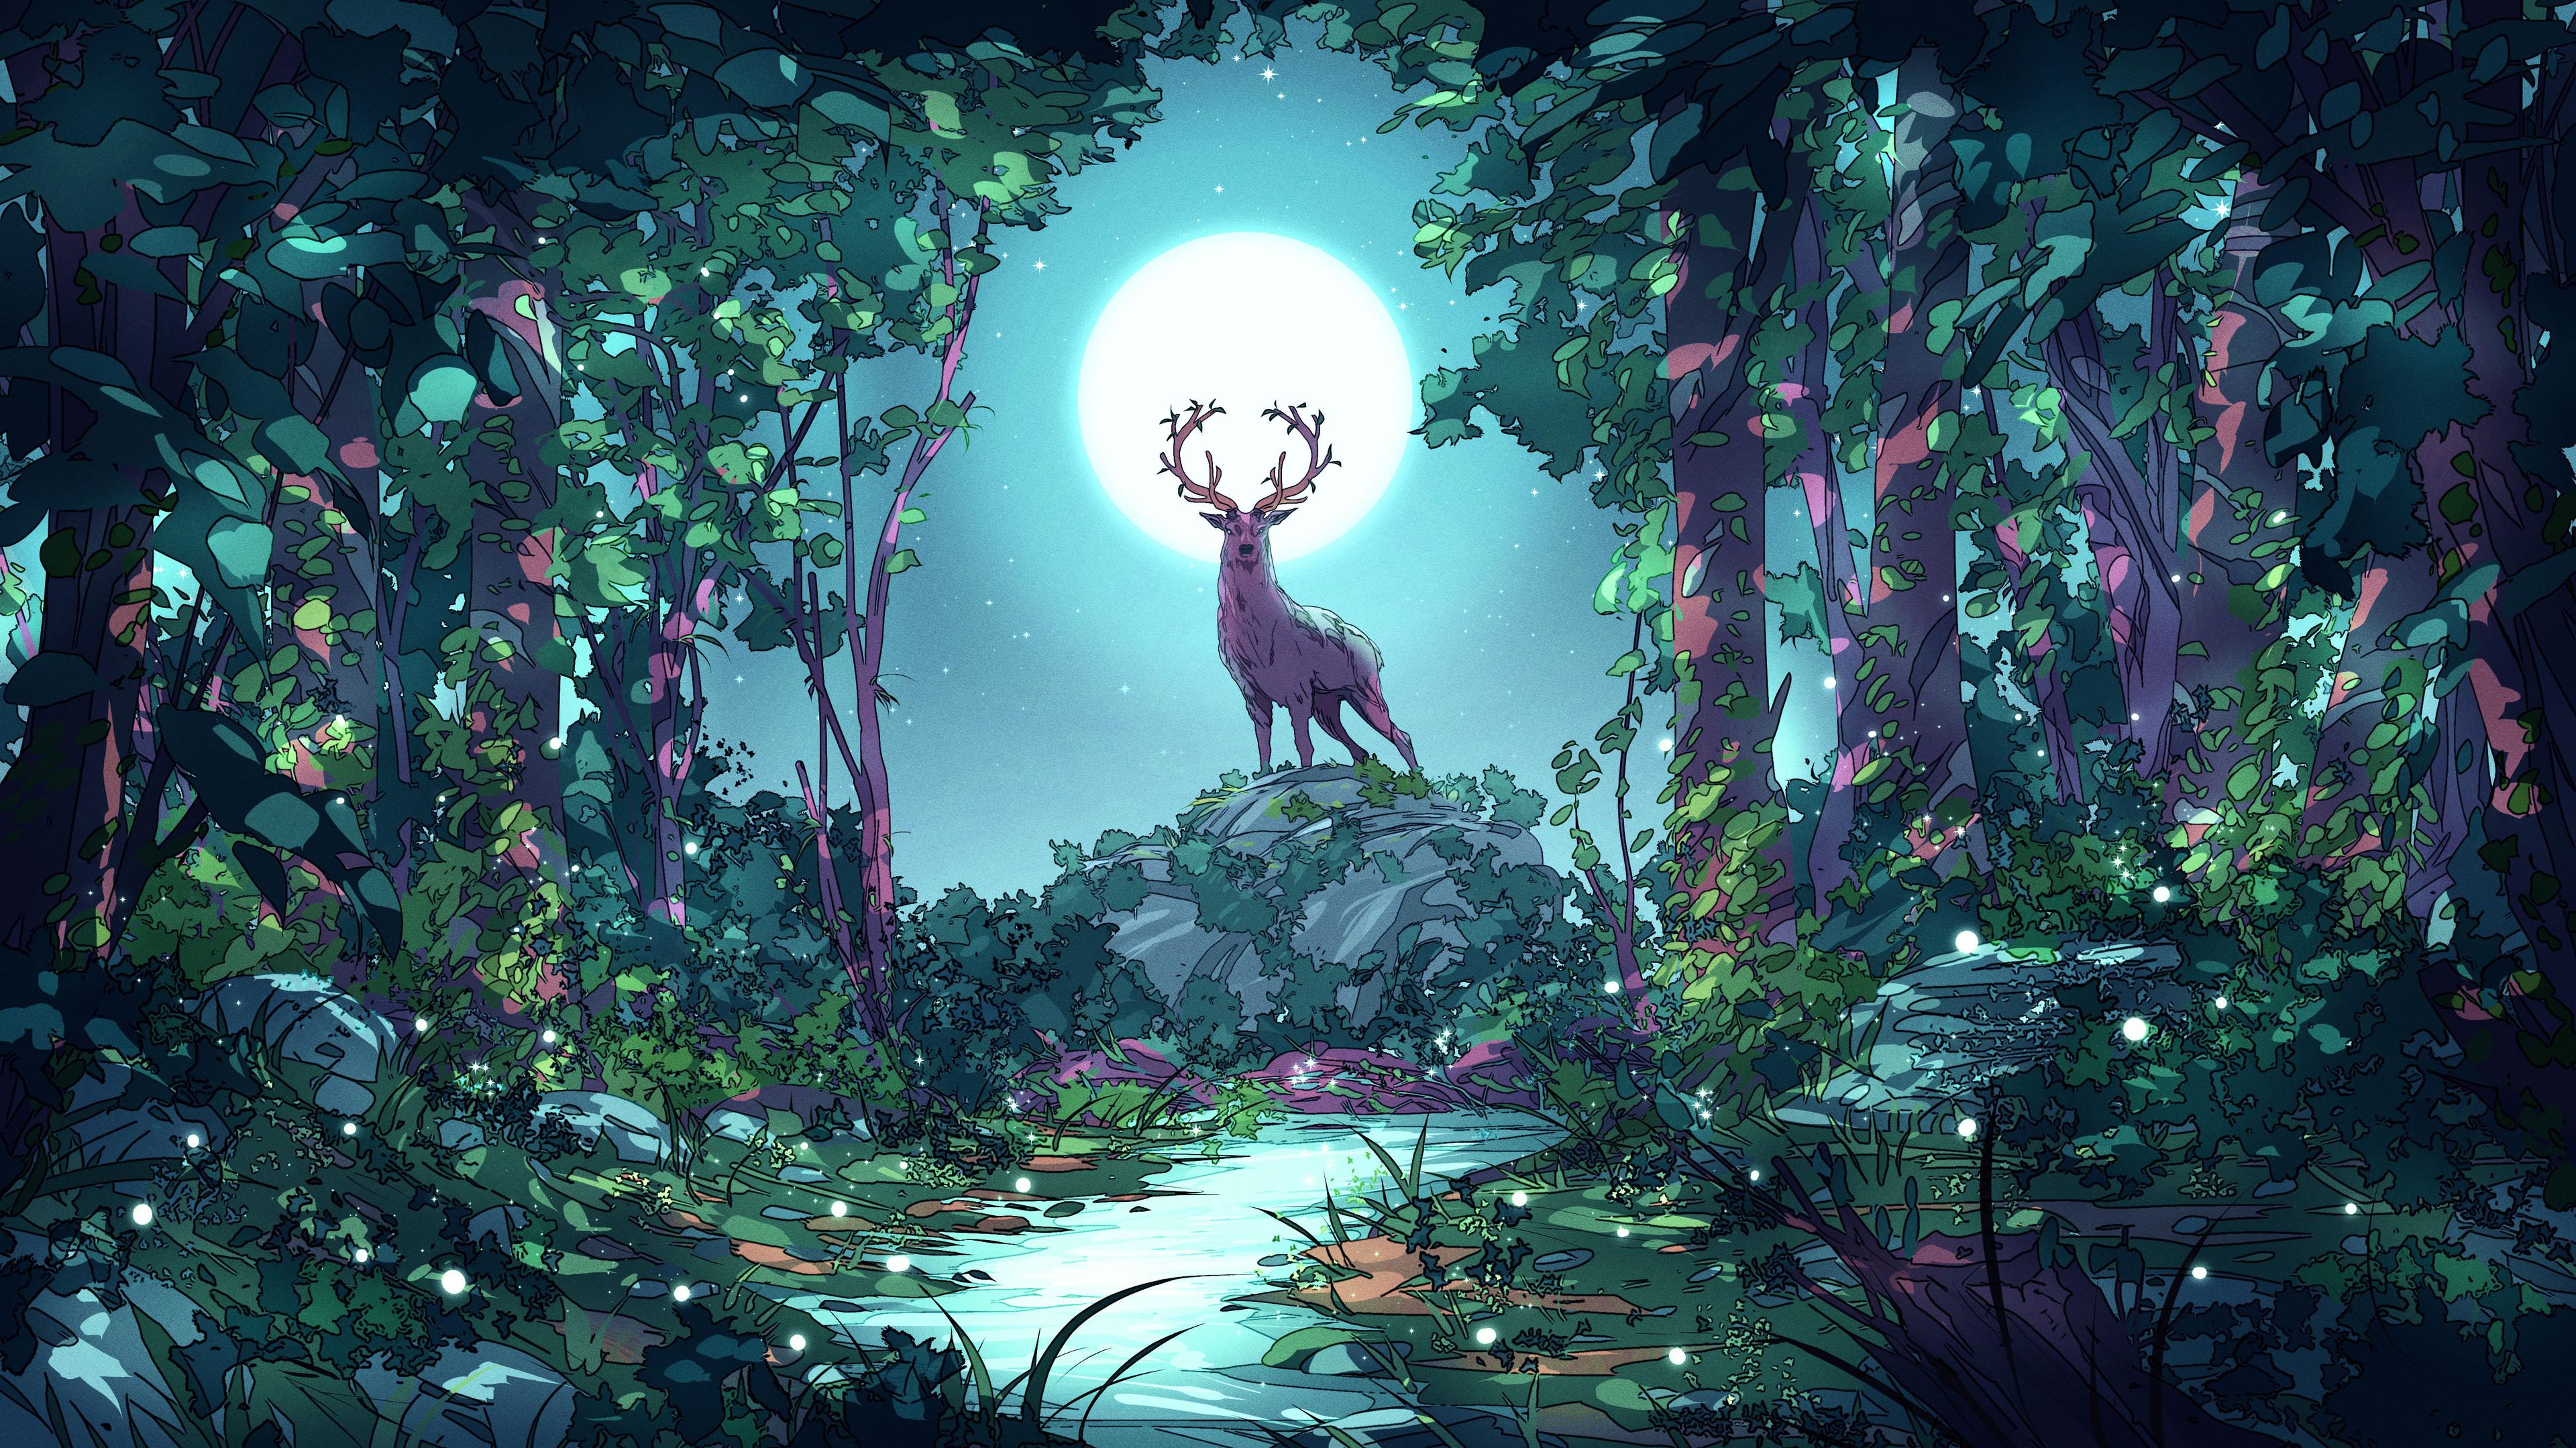 Fantasy Deer 4k Ultra HD Wallpaper By Christian Benavides